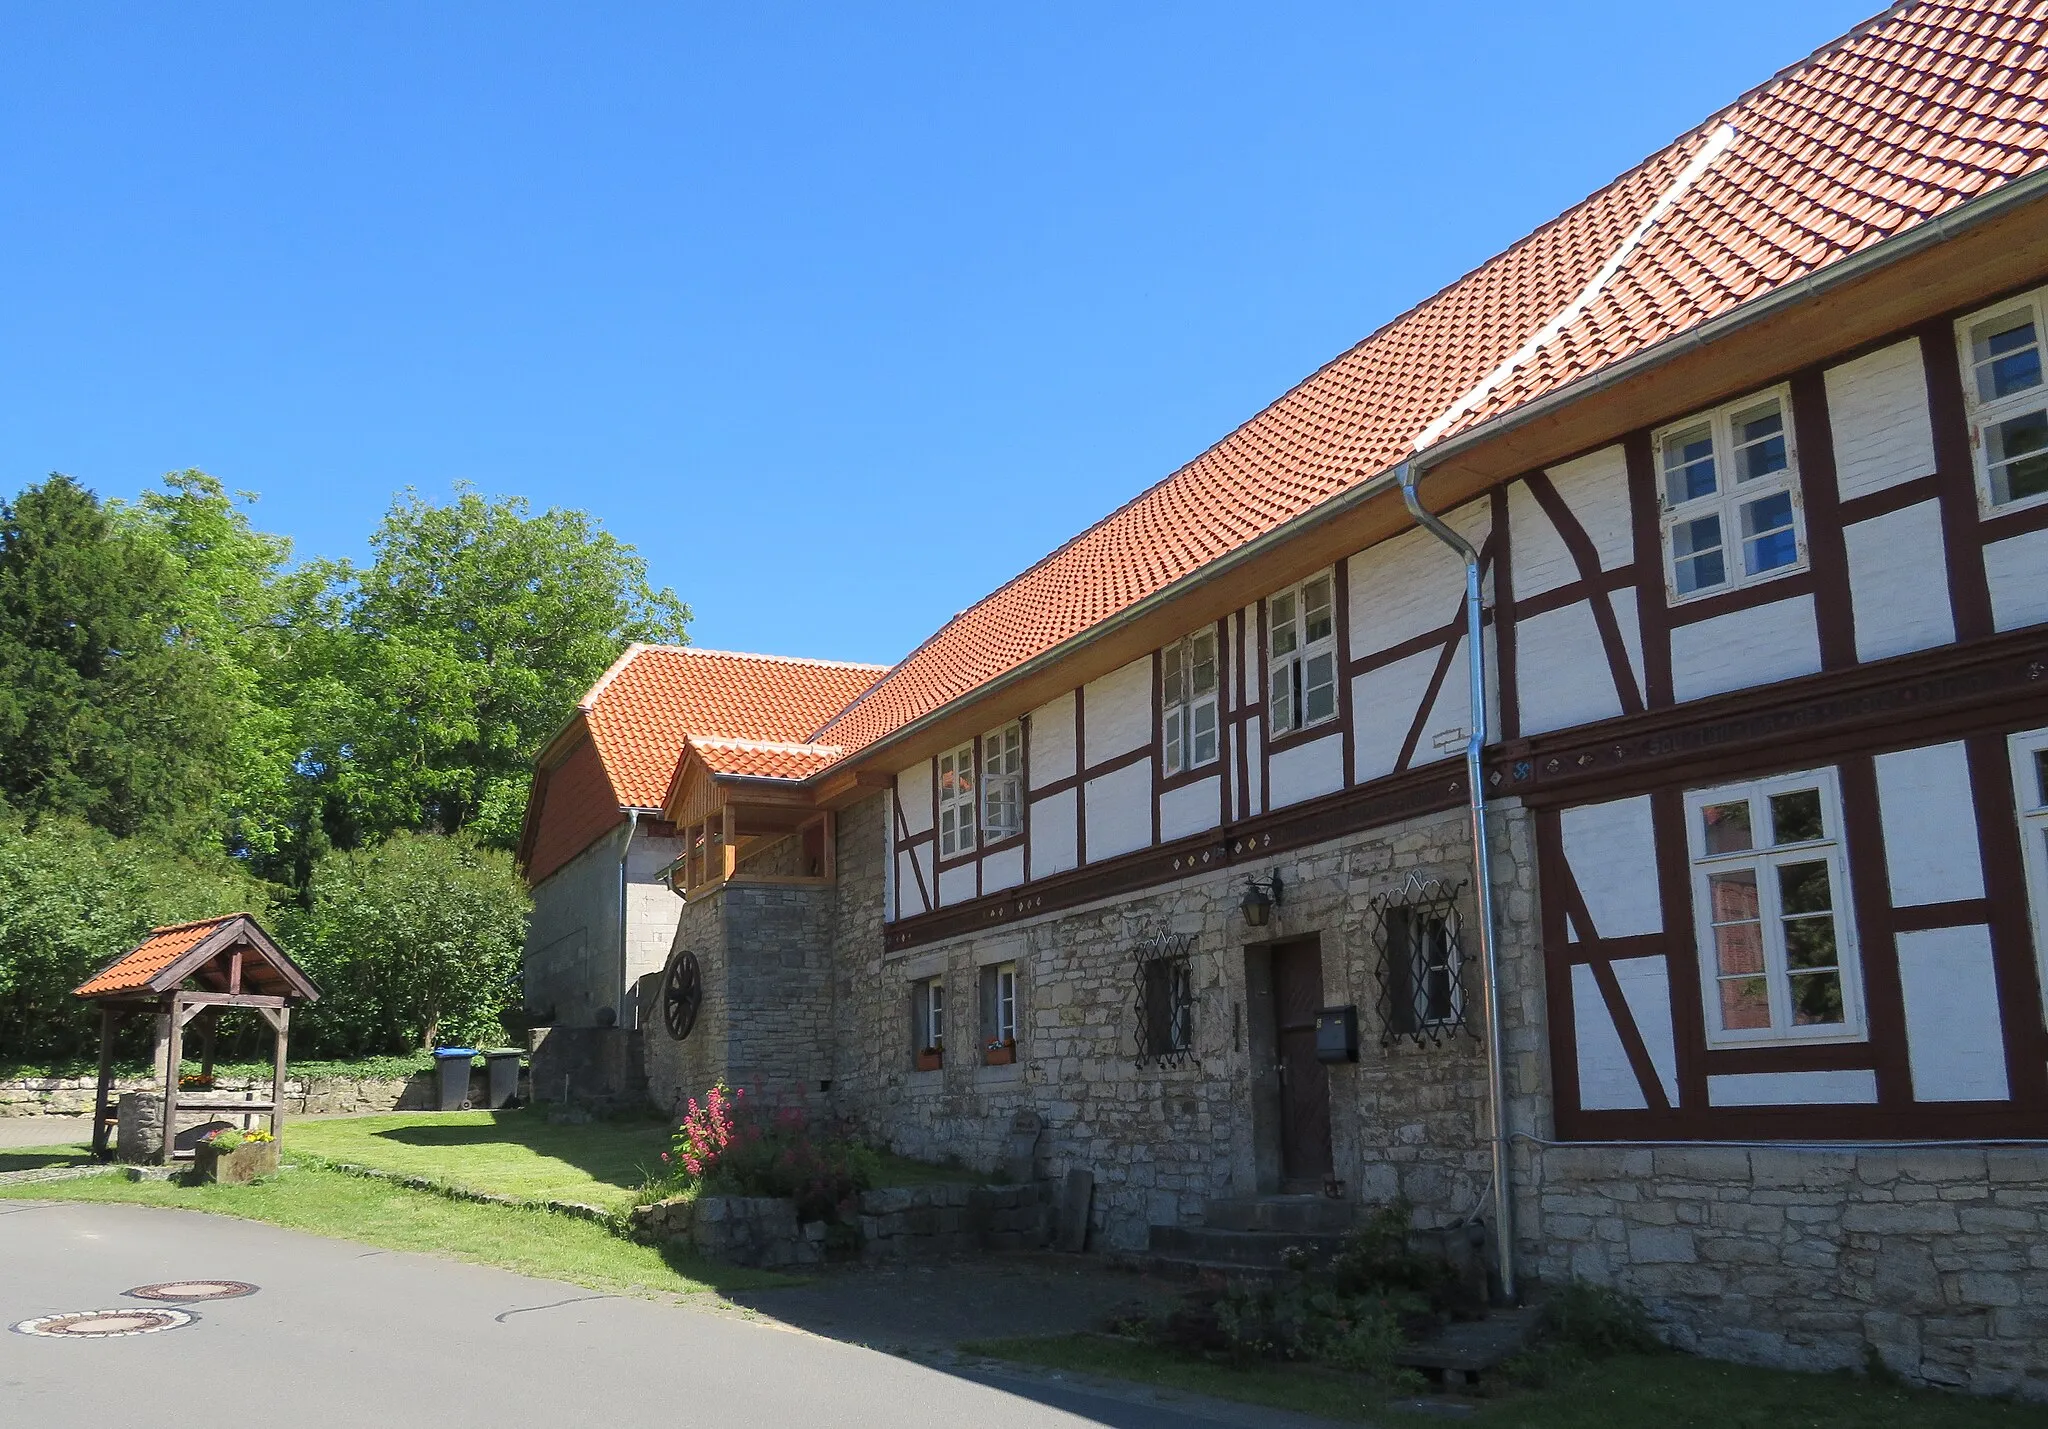 Photo showing: Village centre, Kneitlingen, Lower Saxony, Germany